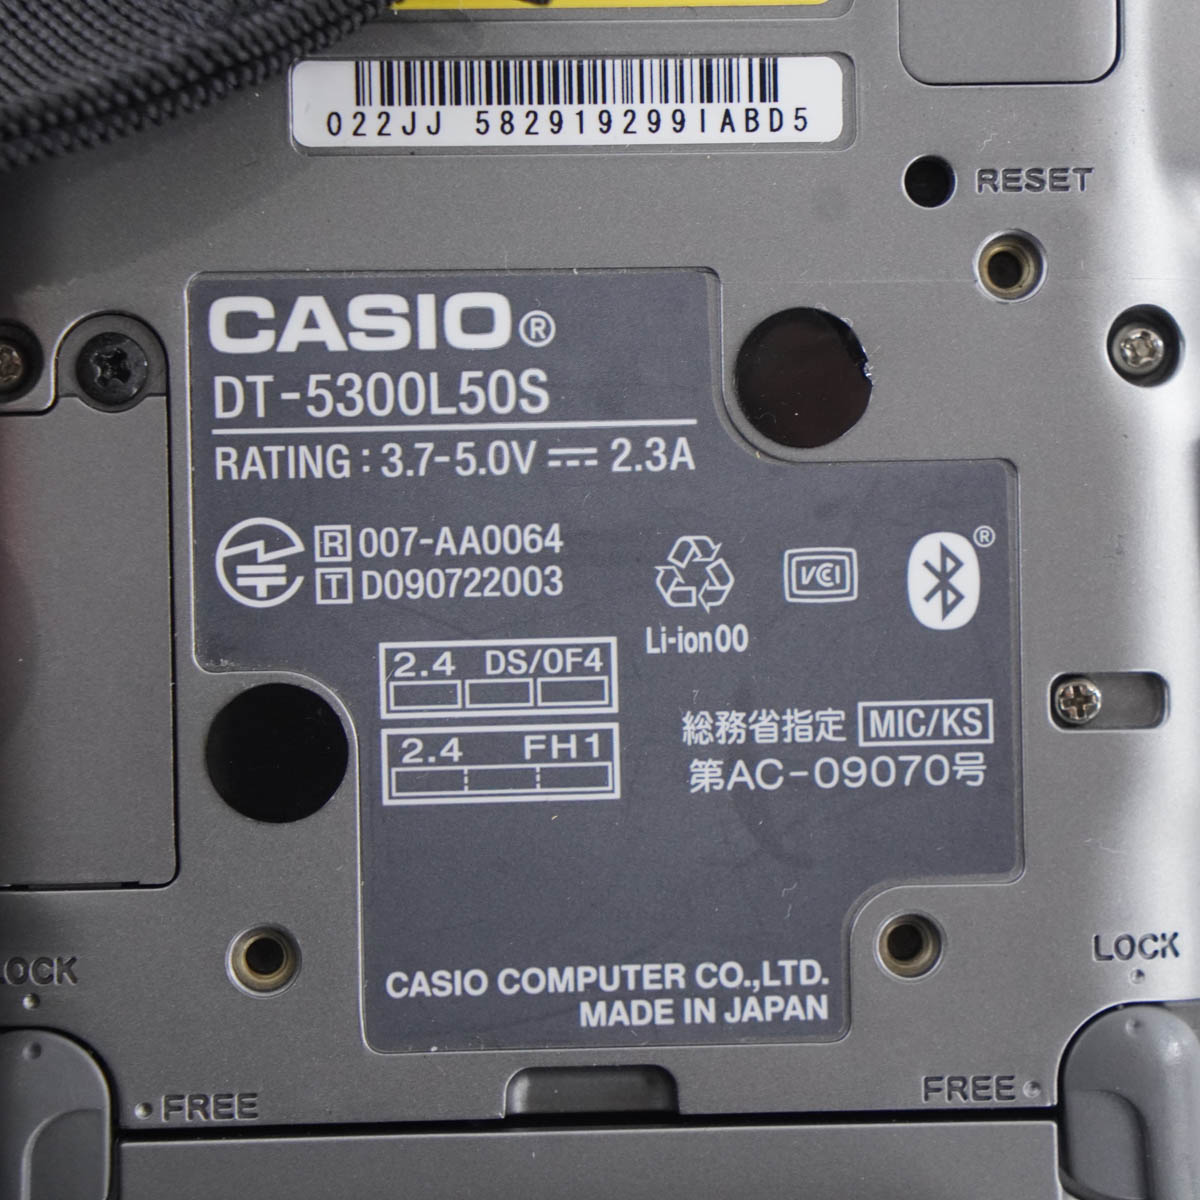 [PG]USED 8日保証 7台セット CASIO DT-5300L50S ハンディターミナル 業務用PDA スキャナー ACアダプター 充電器 [04606-0021] - 2